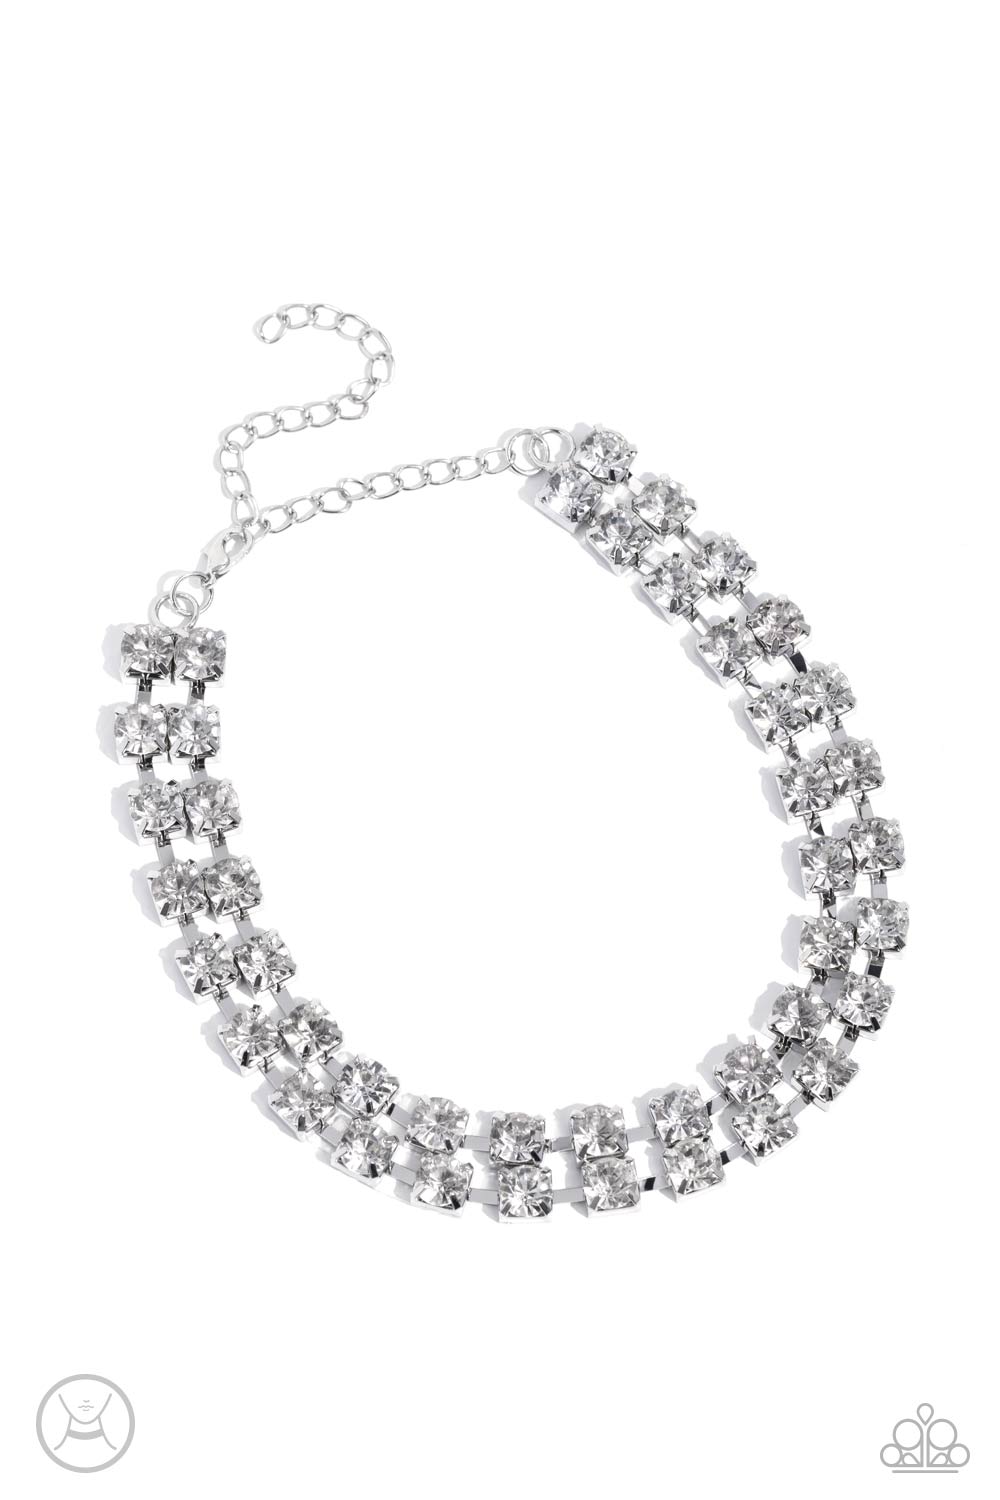 Glistening Gallery White Rhinestone Choker Necklace - Paparazzi Accessories- lightbox - CarasShop.com - $5 Jewelry by Cara Jewels